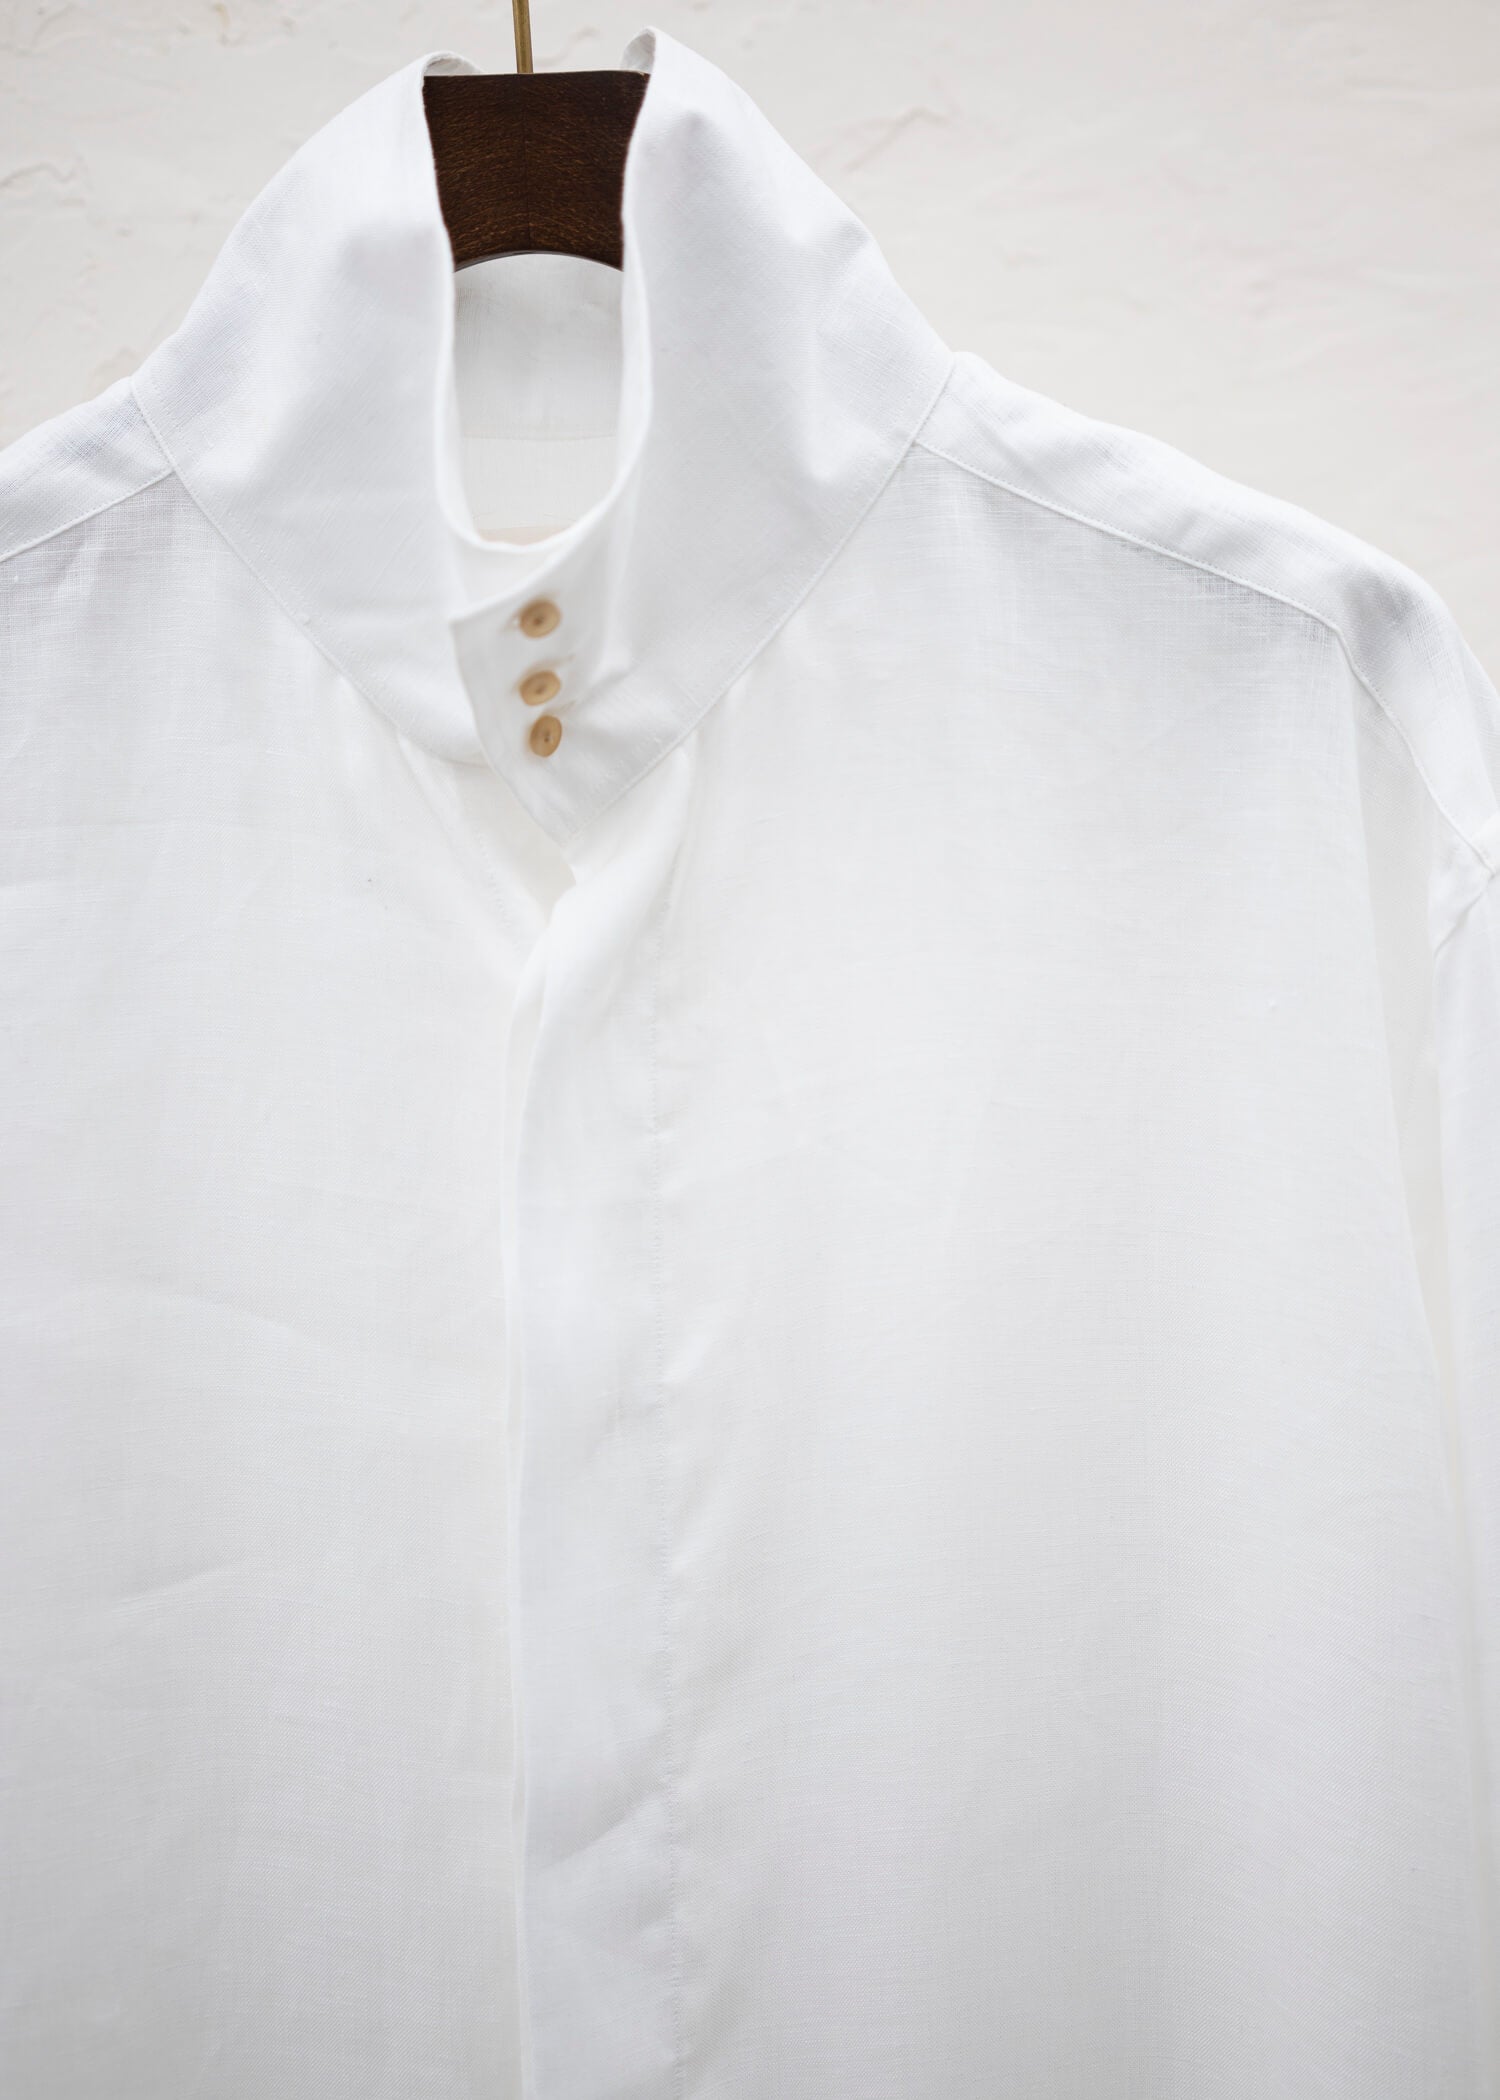 ZIIIN "OSCAR" 高领衬衫 / 白色